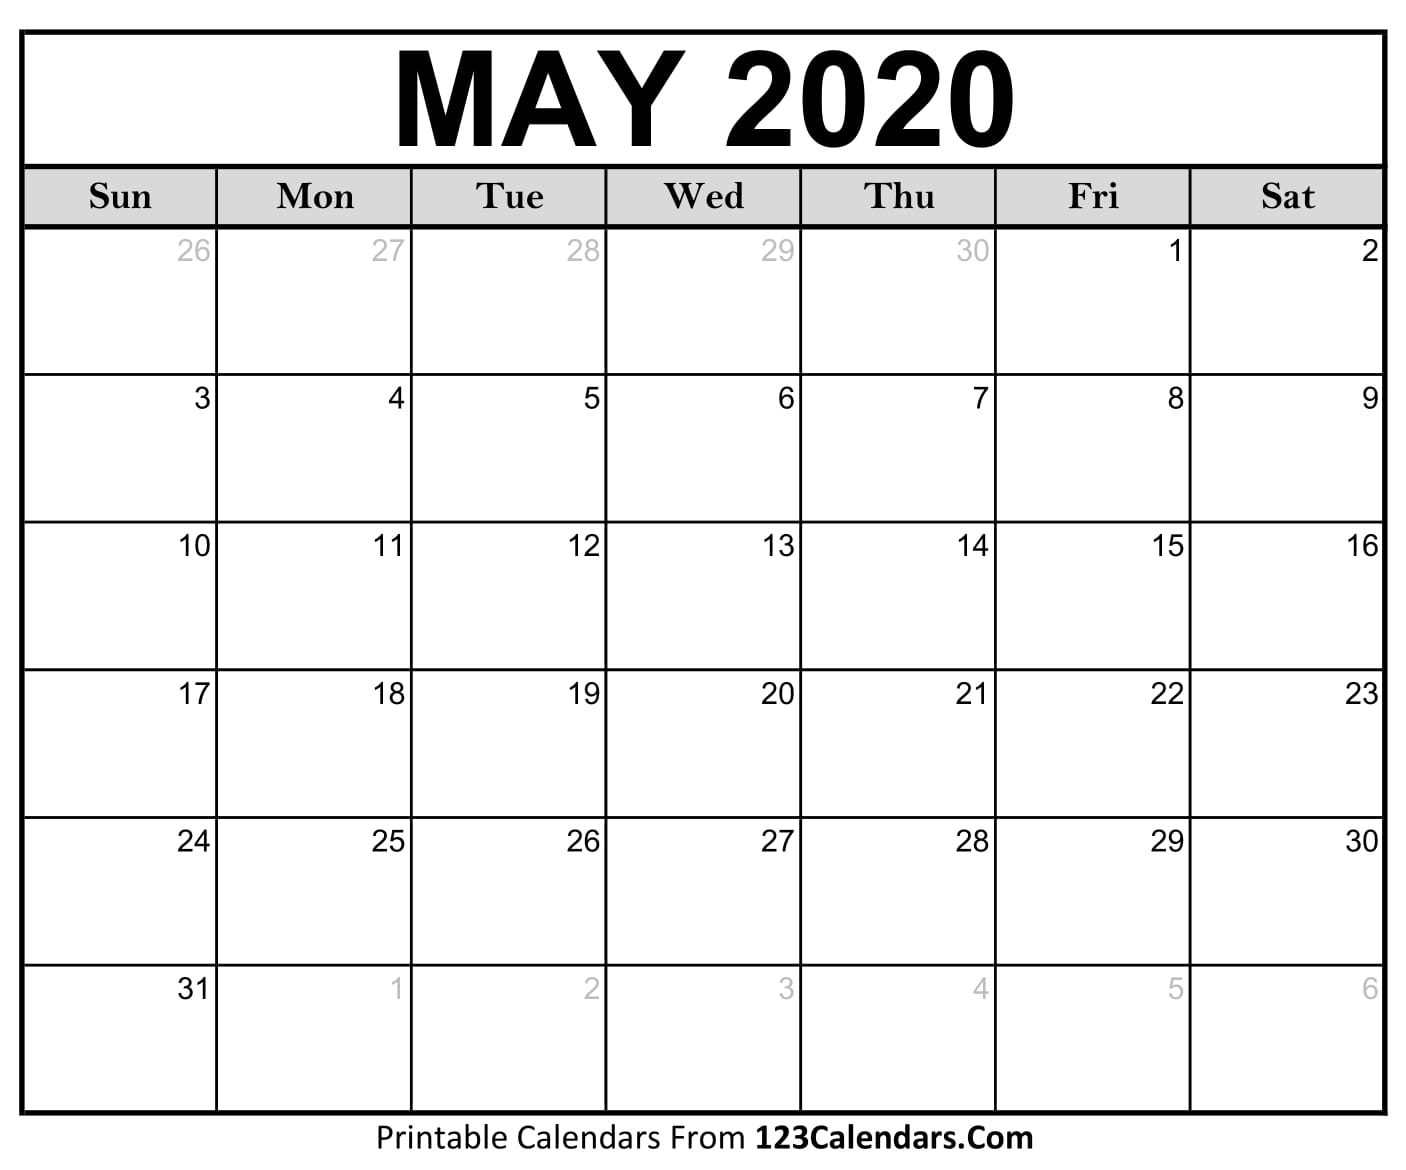 Printable May 2020 Calendar Templates | 123Calendars